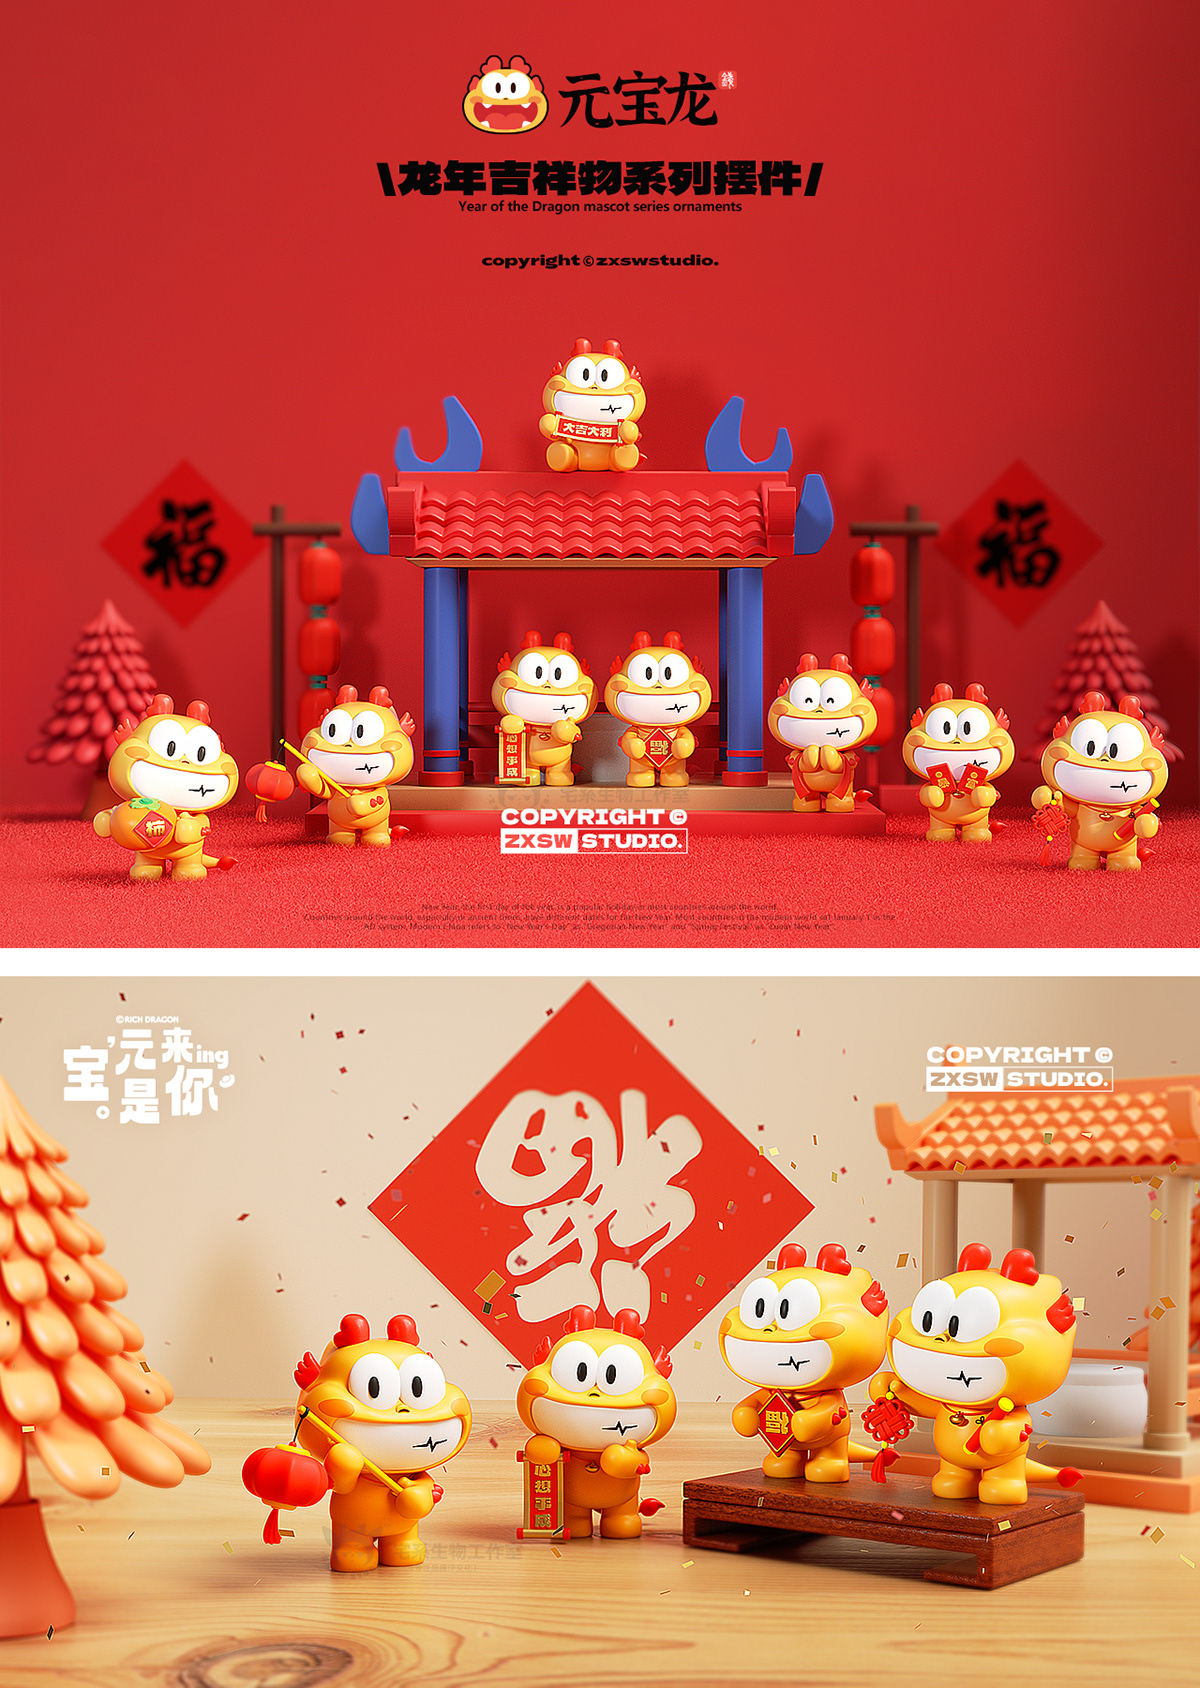 IP cute dragon china newyear 2024 calendar Character c4d cartoon 元宝龙